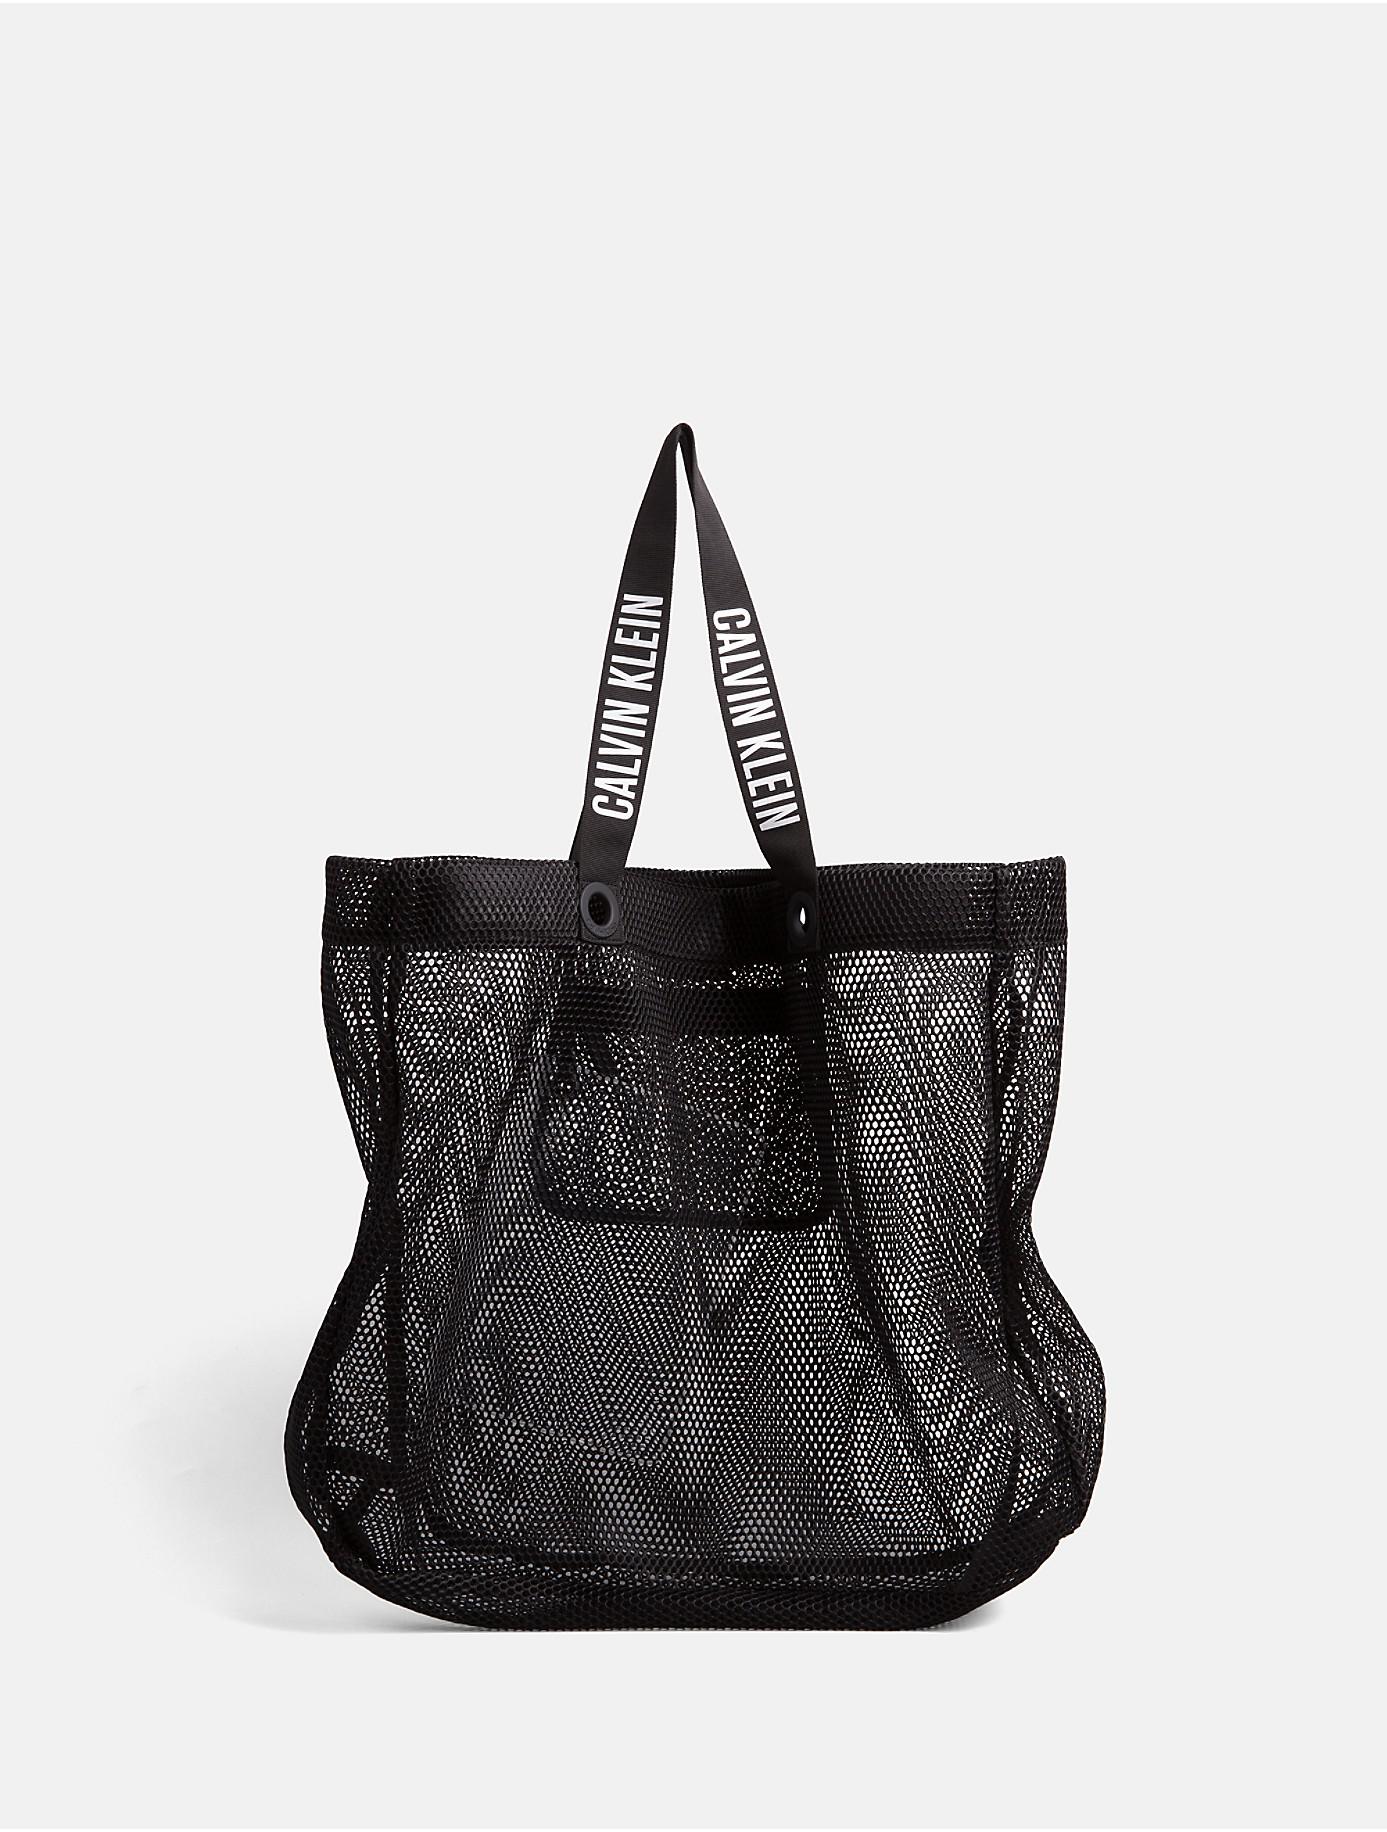 Calvin Klein Synthetic Mesh Beach Tote Bag in Black - Lyst